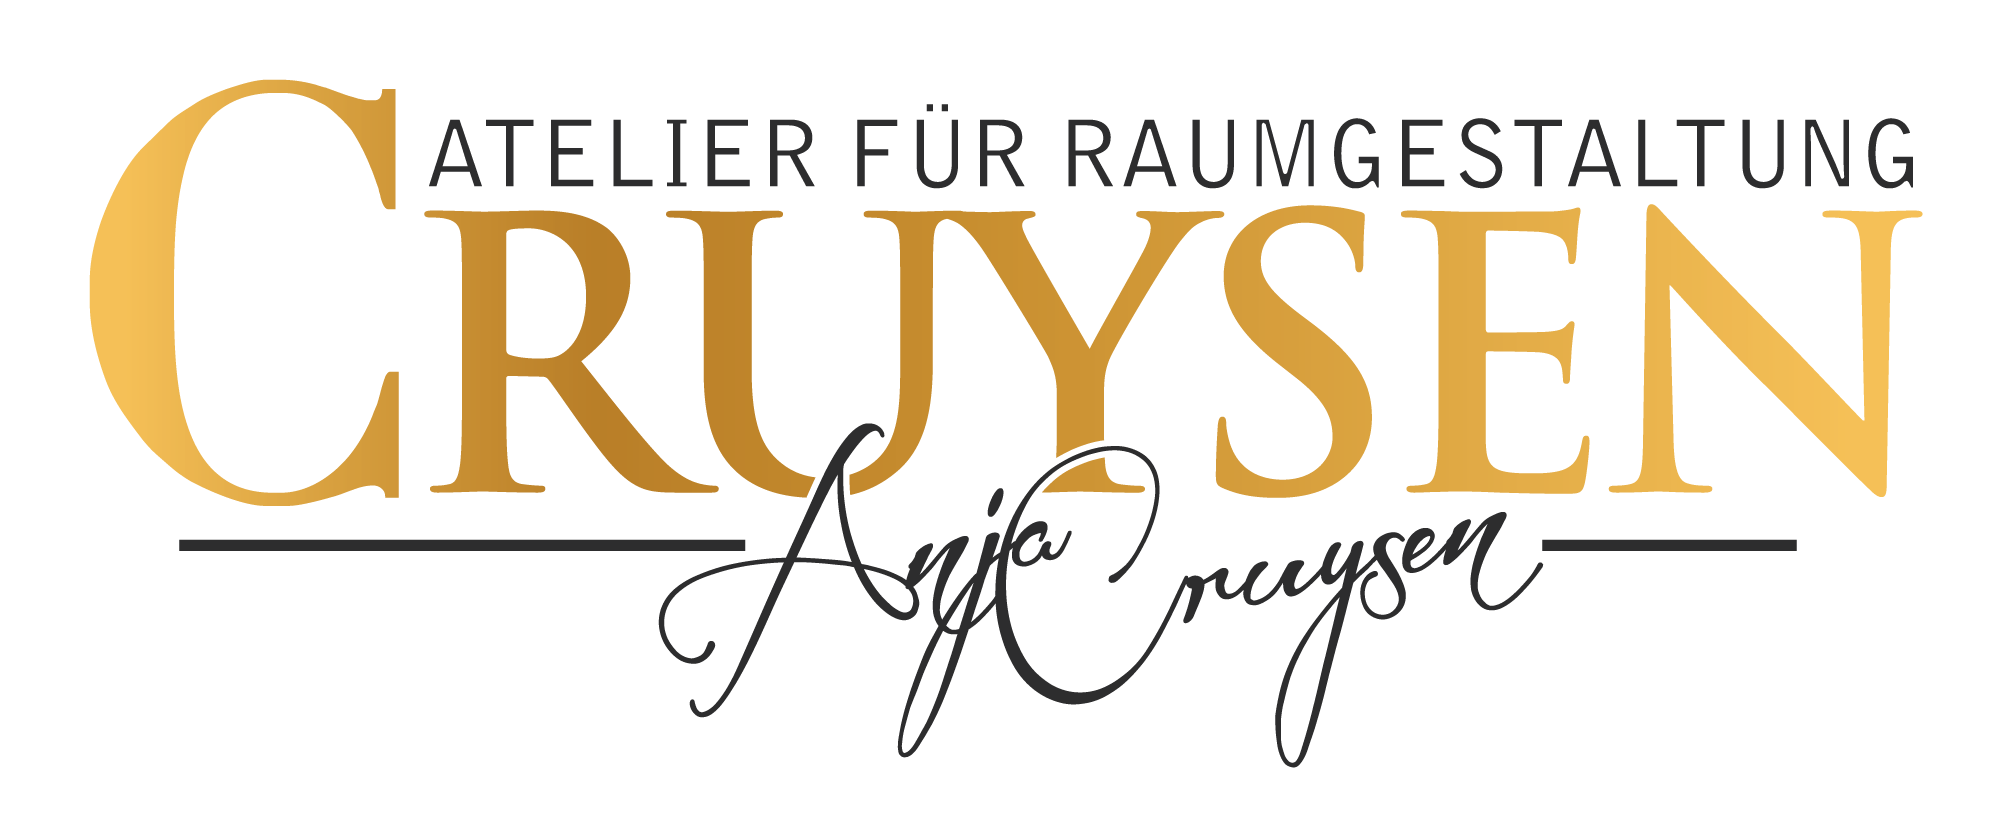 Atelier Cruysen Logo